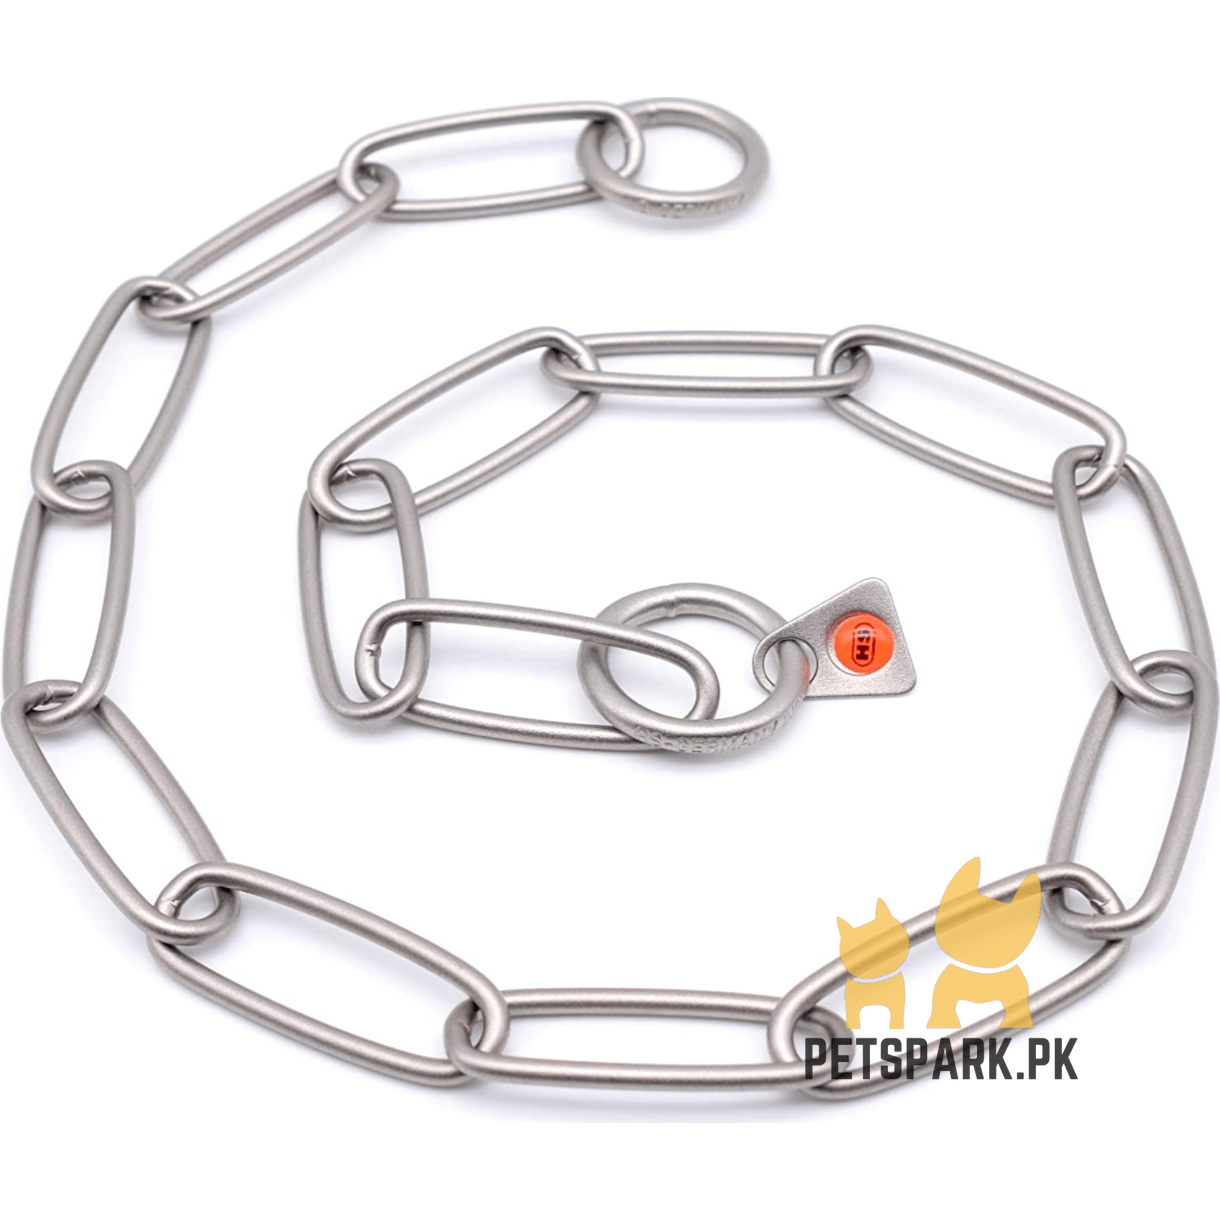 Long Link Choke Chain pets-park-pk